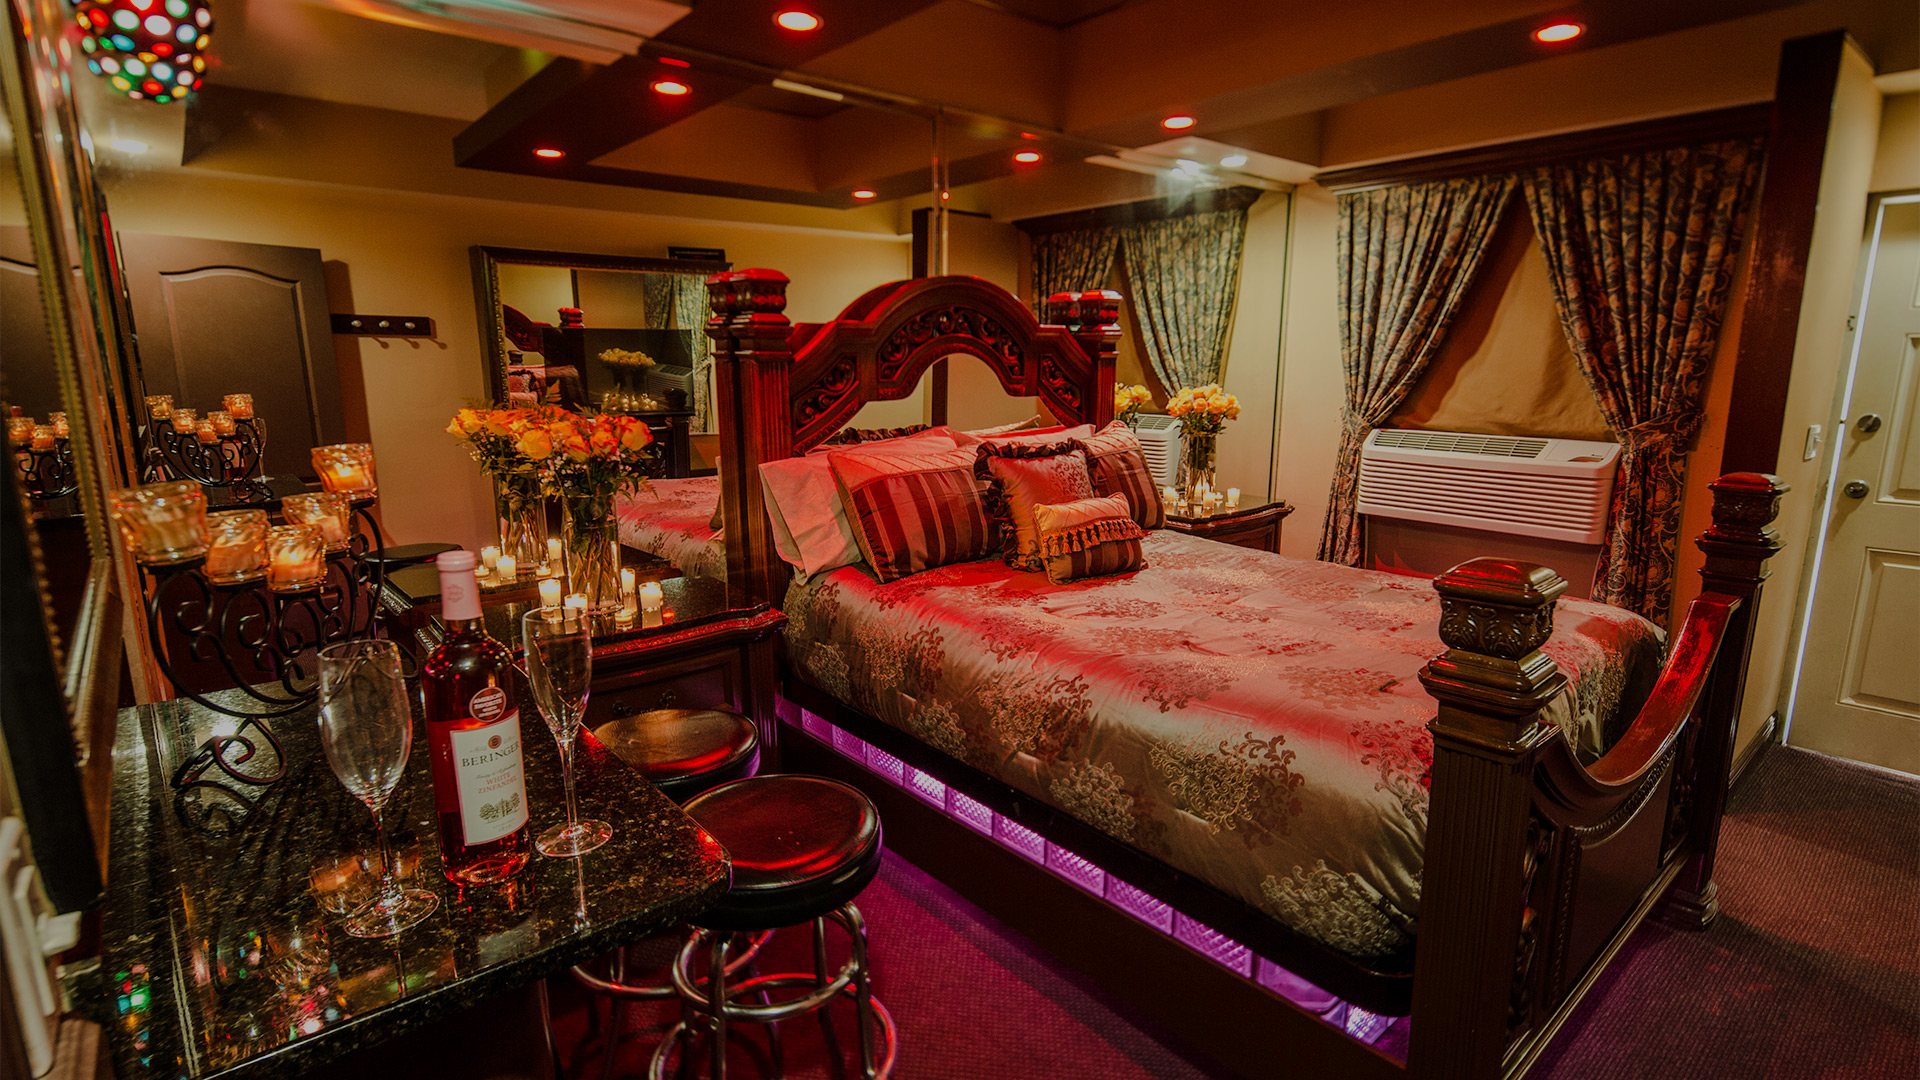 Executive Fantasy Hotels Executive Motel Miami Theme Hotels In Miami Romantic Miami Motel Haciendo Fantasias Realidad